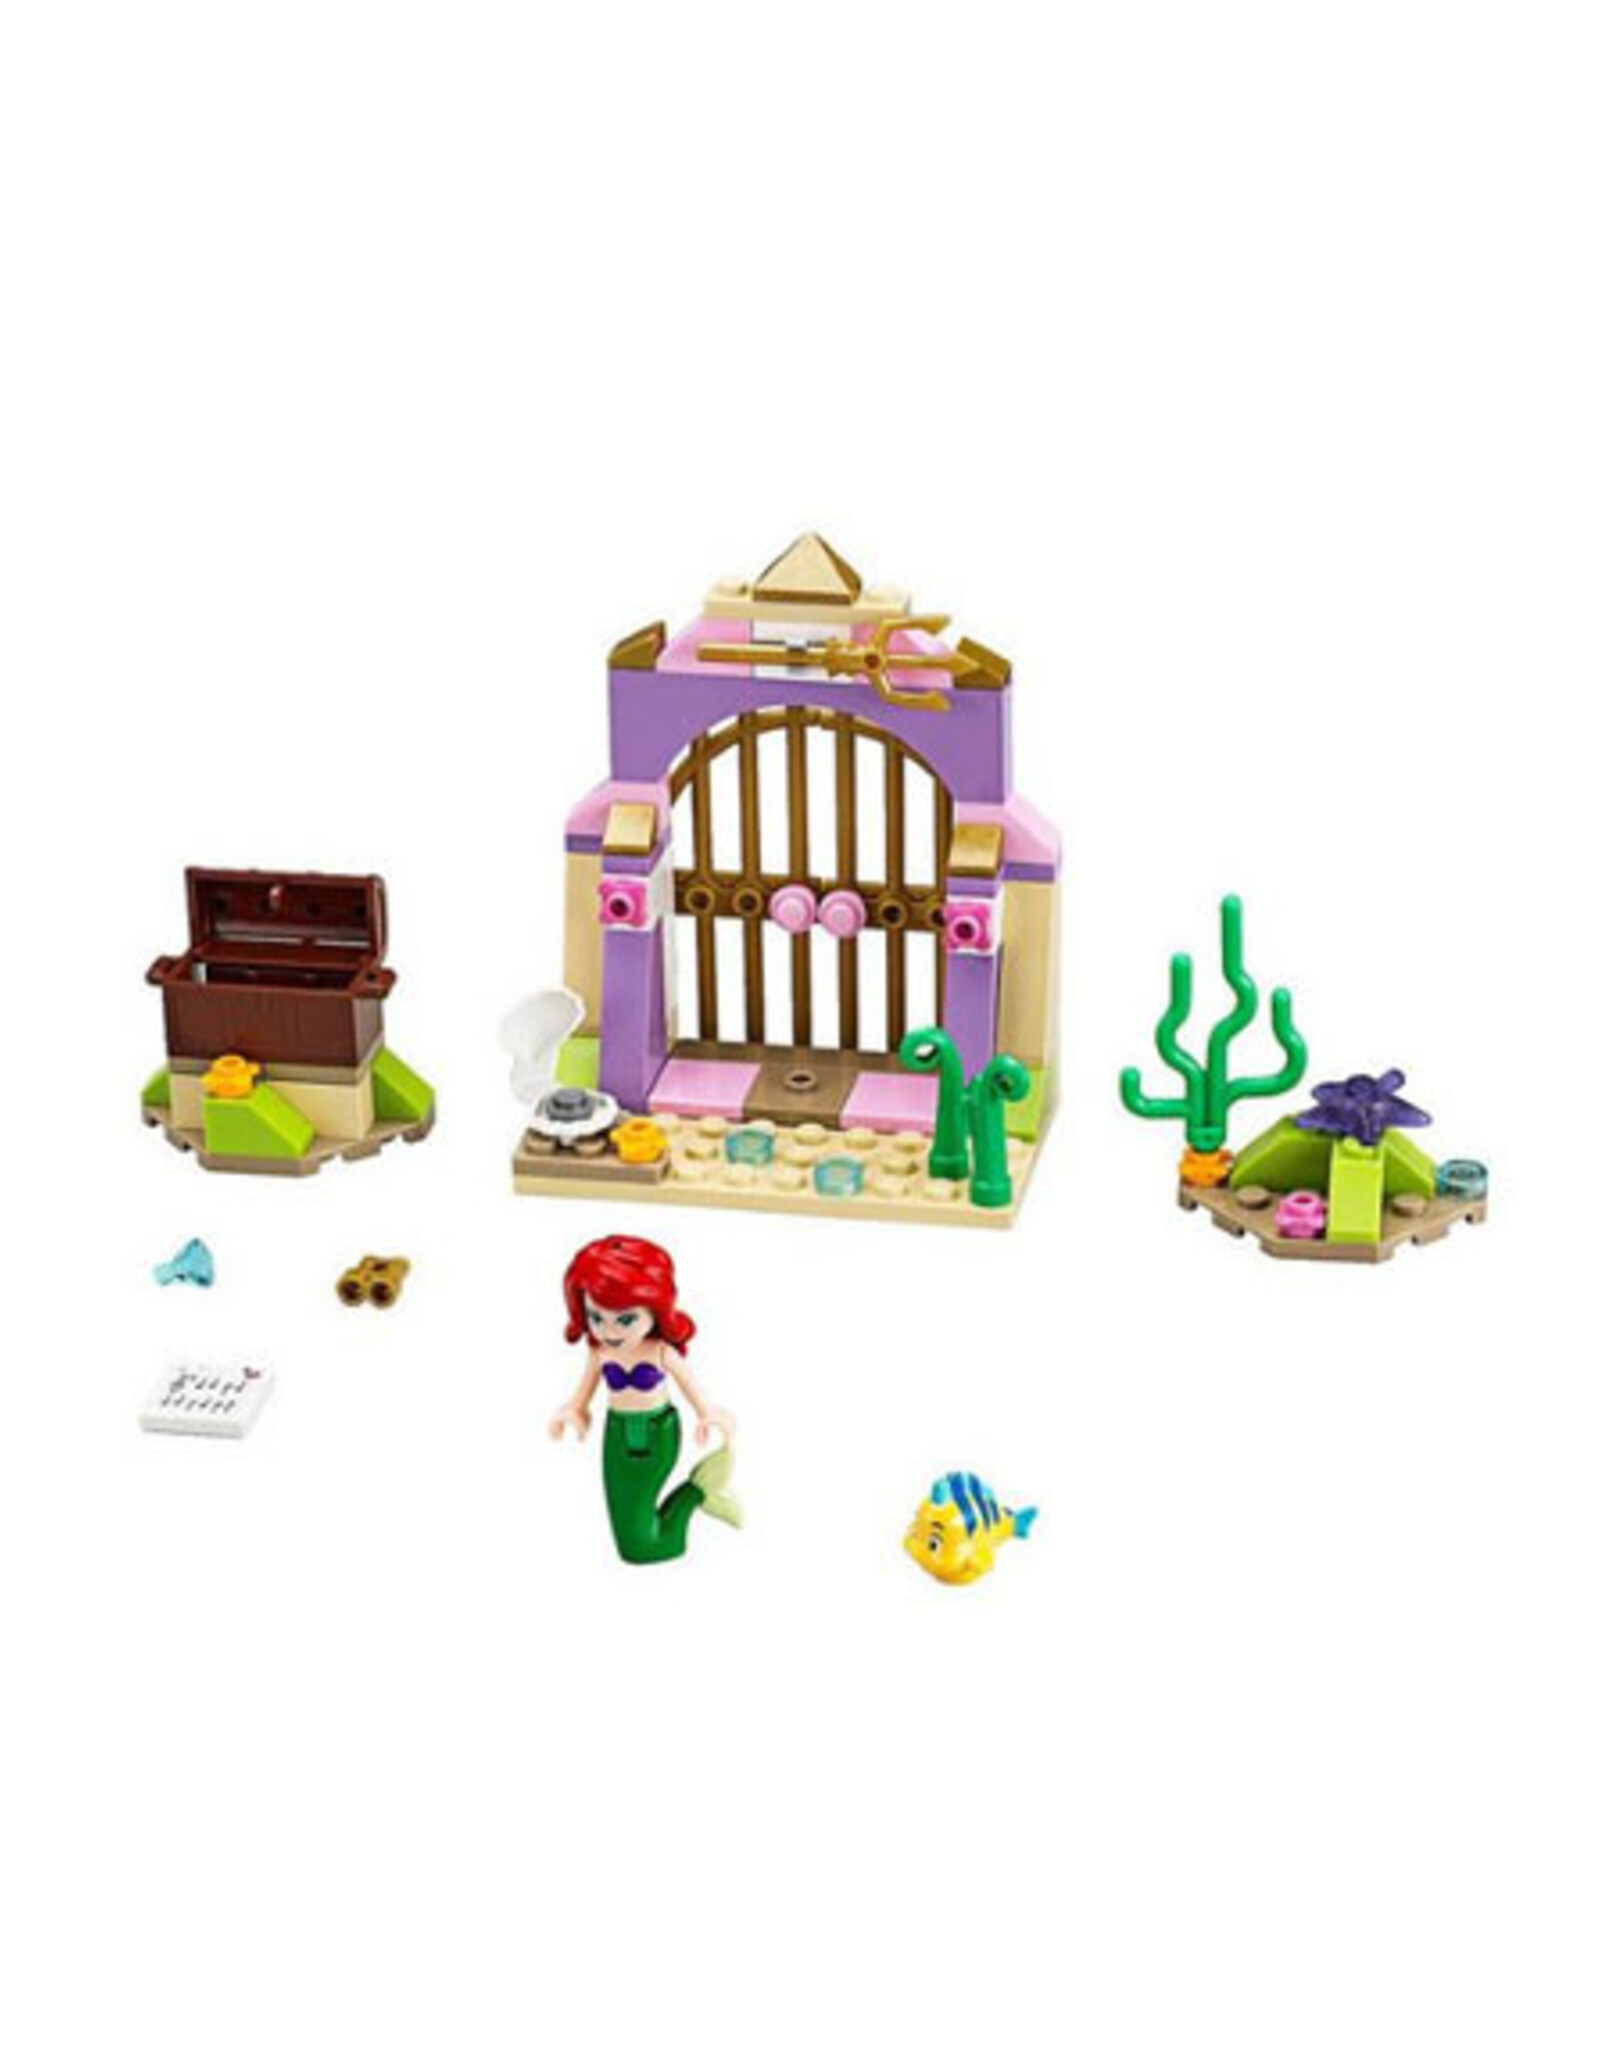 LEGO LEGO 41050 Ariel's Amazing Treasures DISNEY